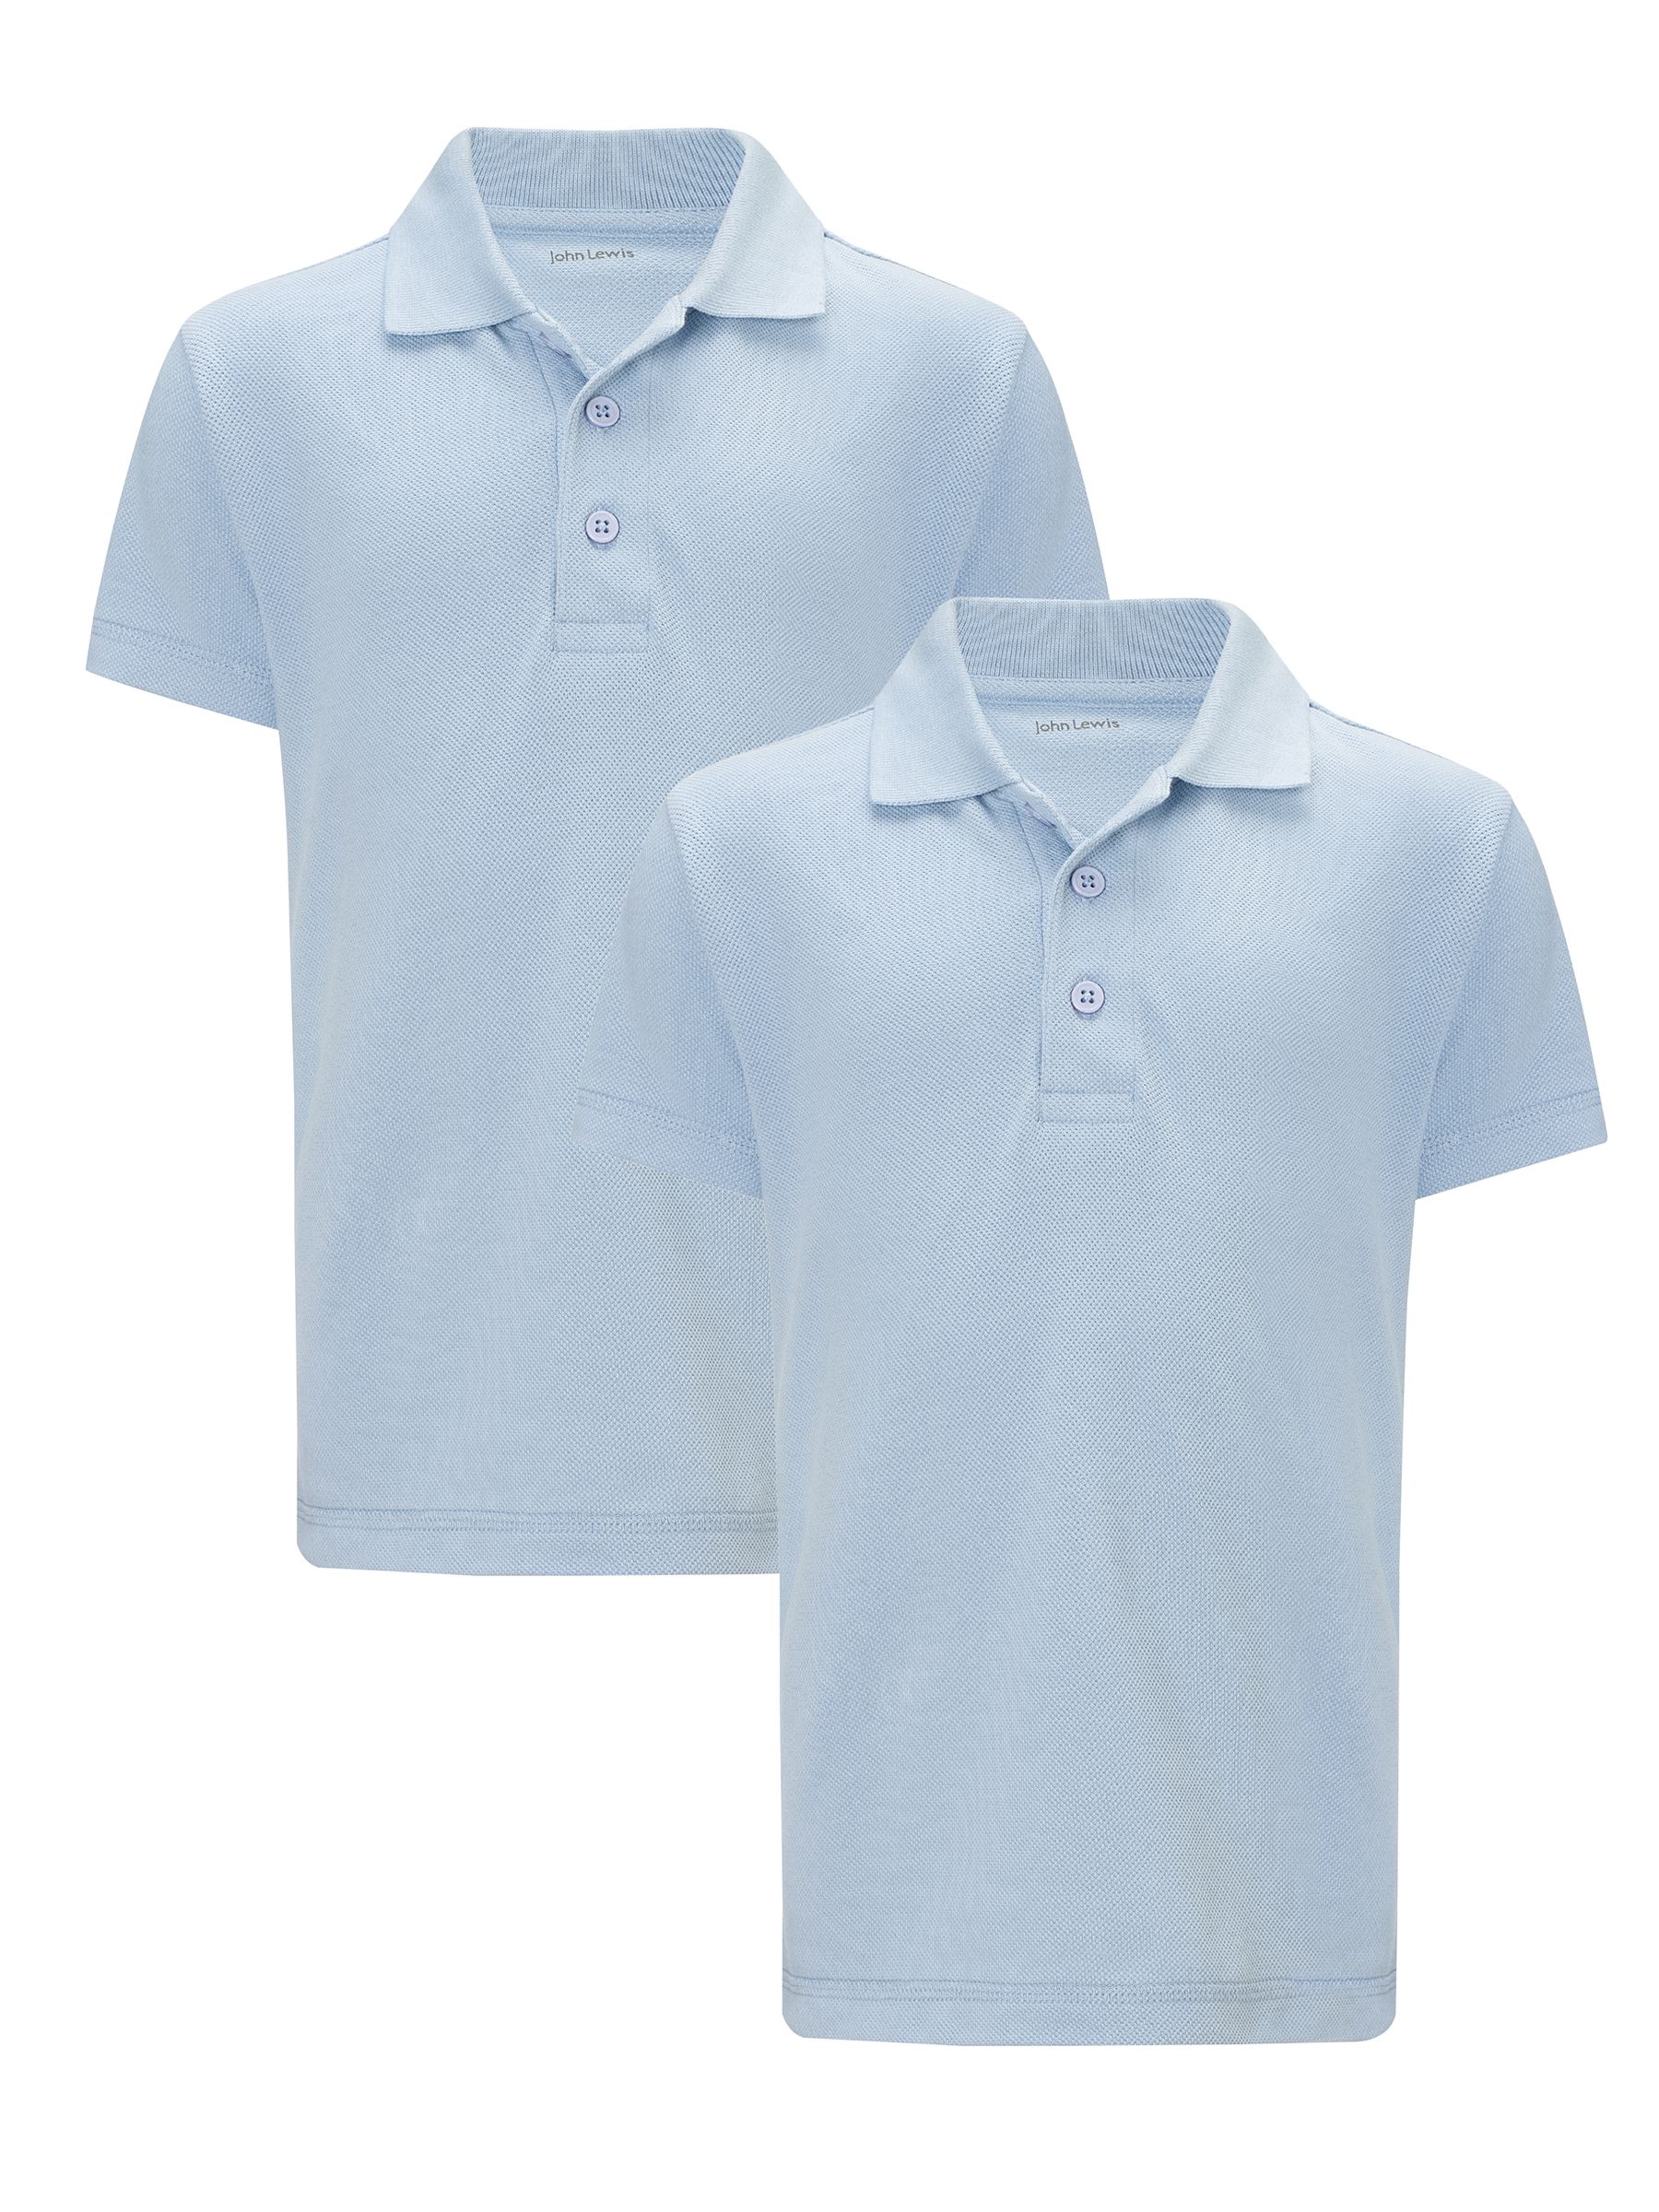 Buy John Lewis Cotton Polo Shirt, Pack of 2, Blue online at JohnLewis 